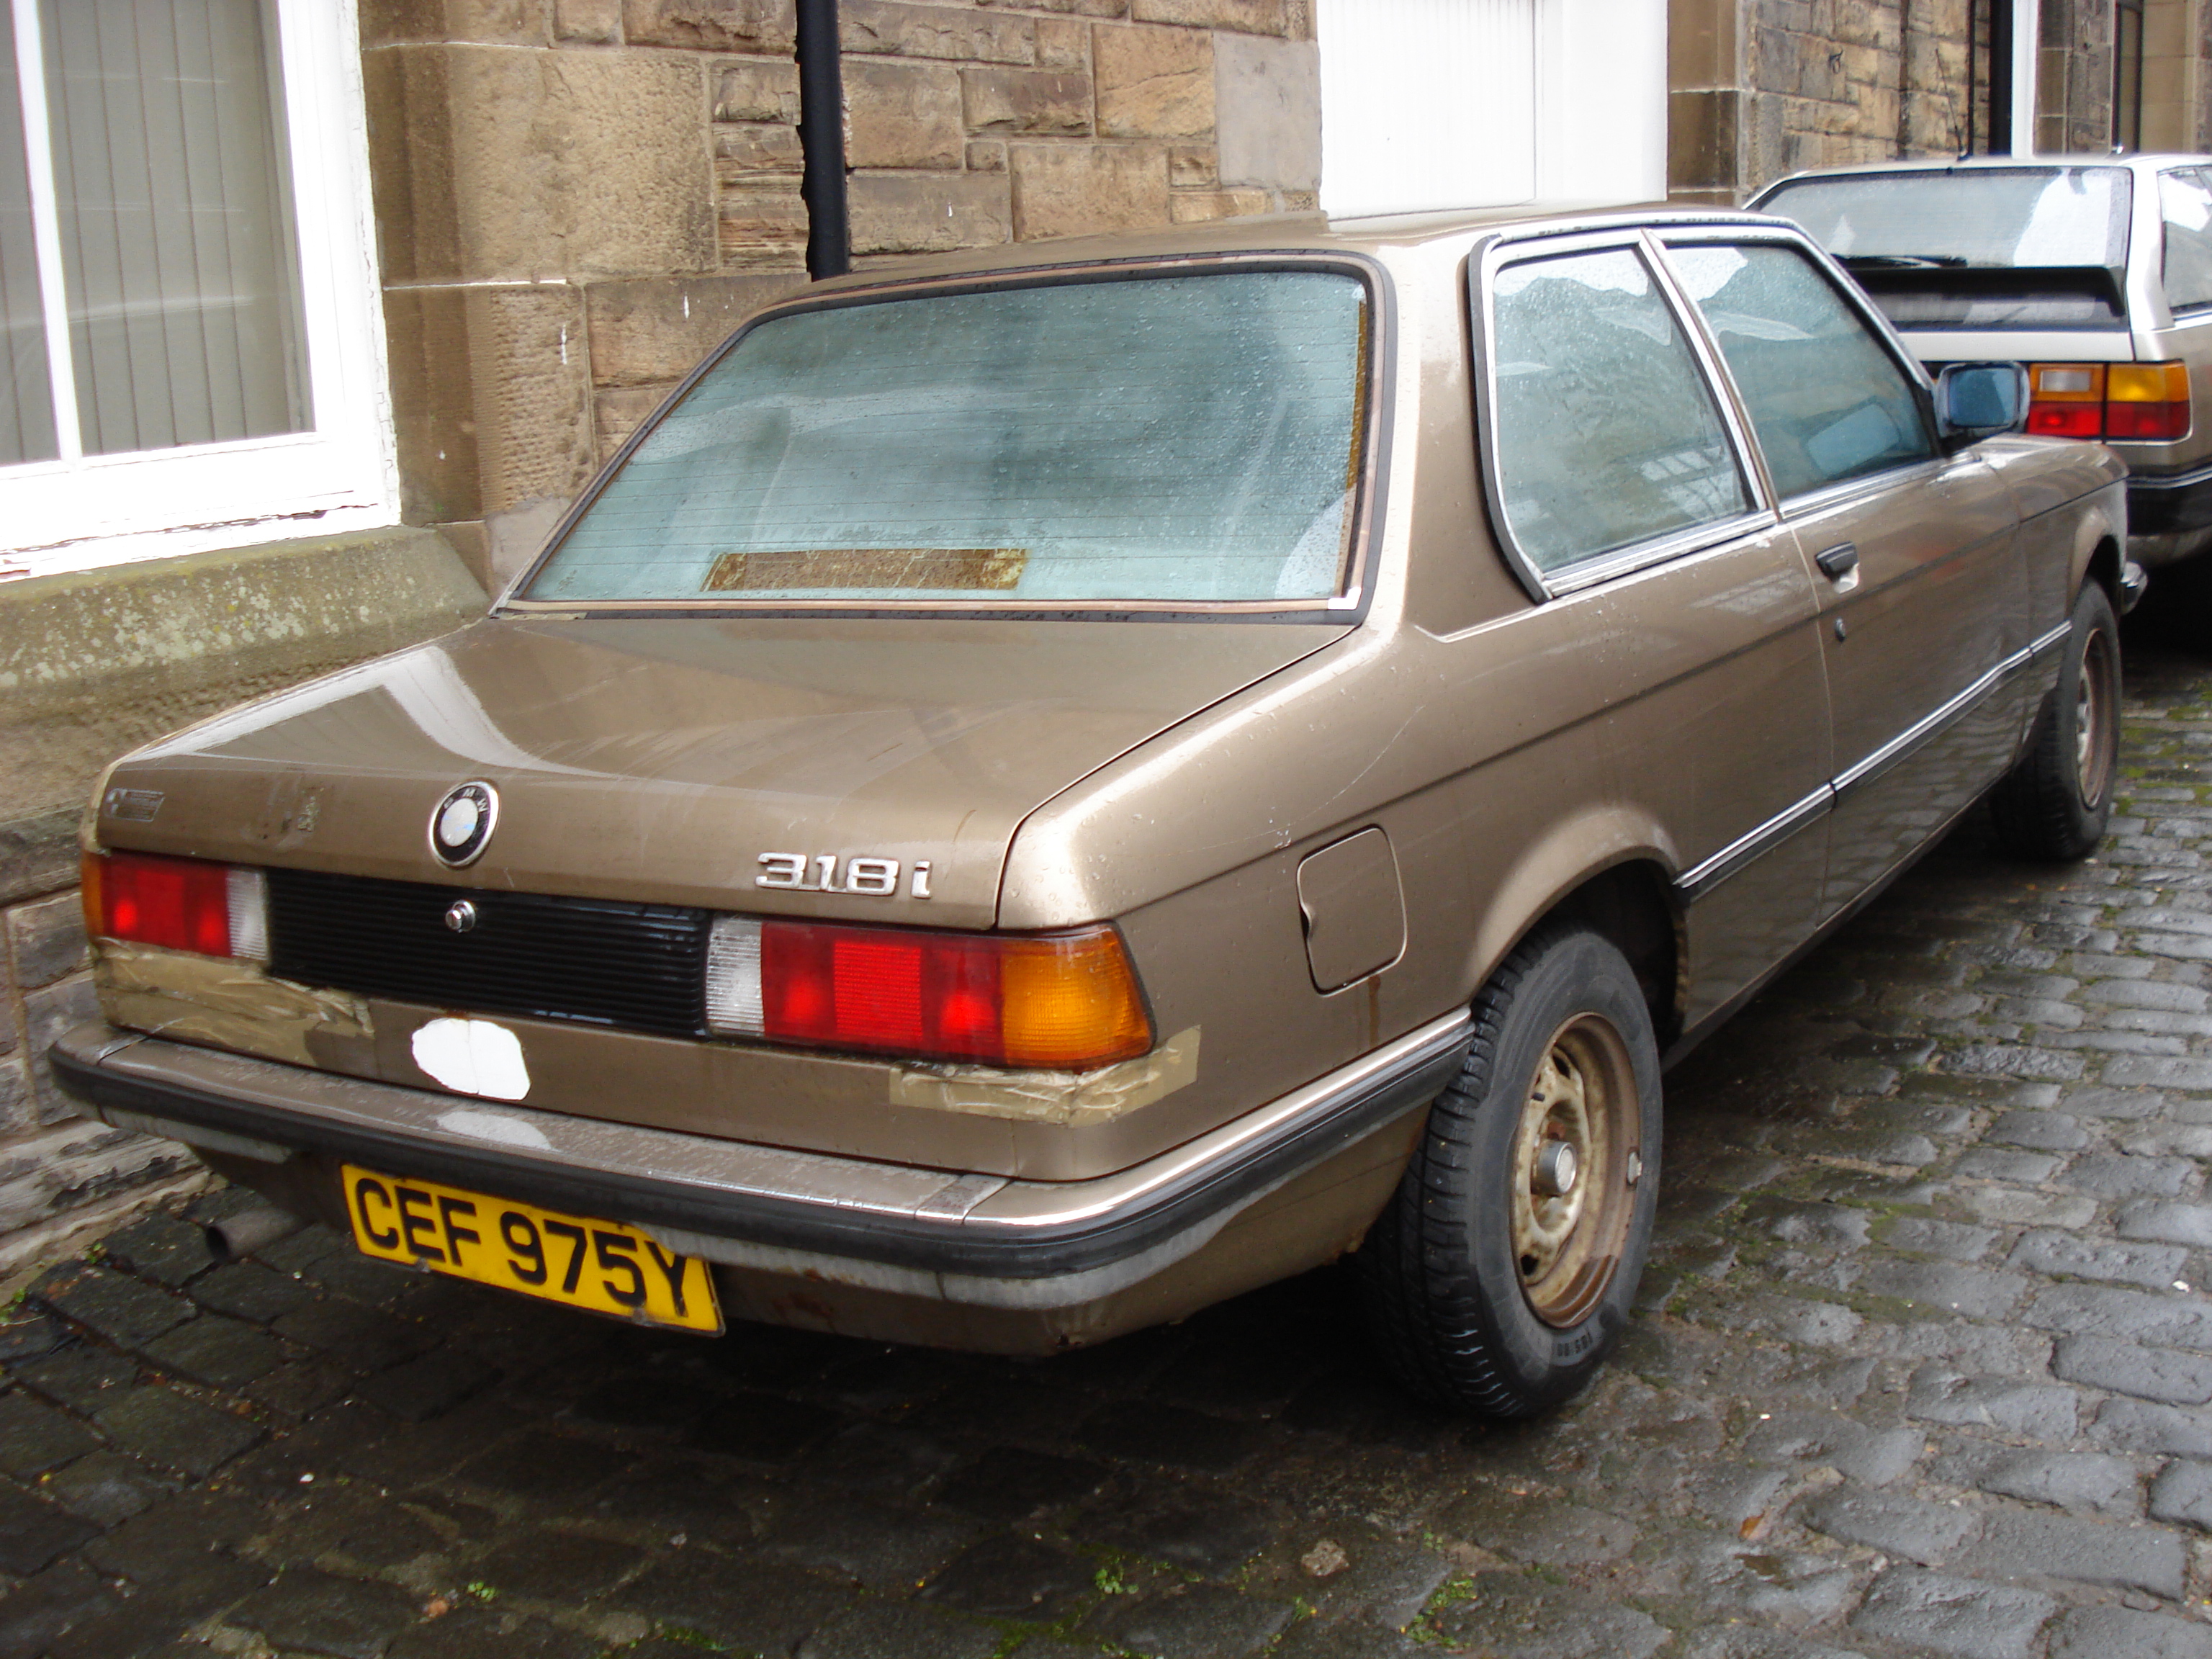 1983 BMW 318i | Flickr - Photo Sharing!